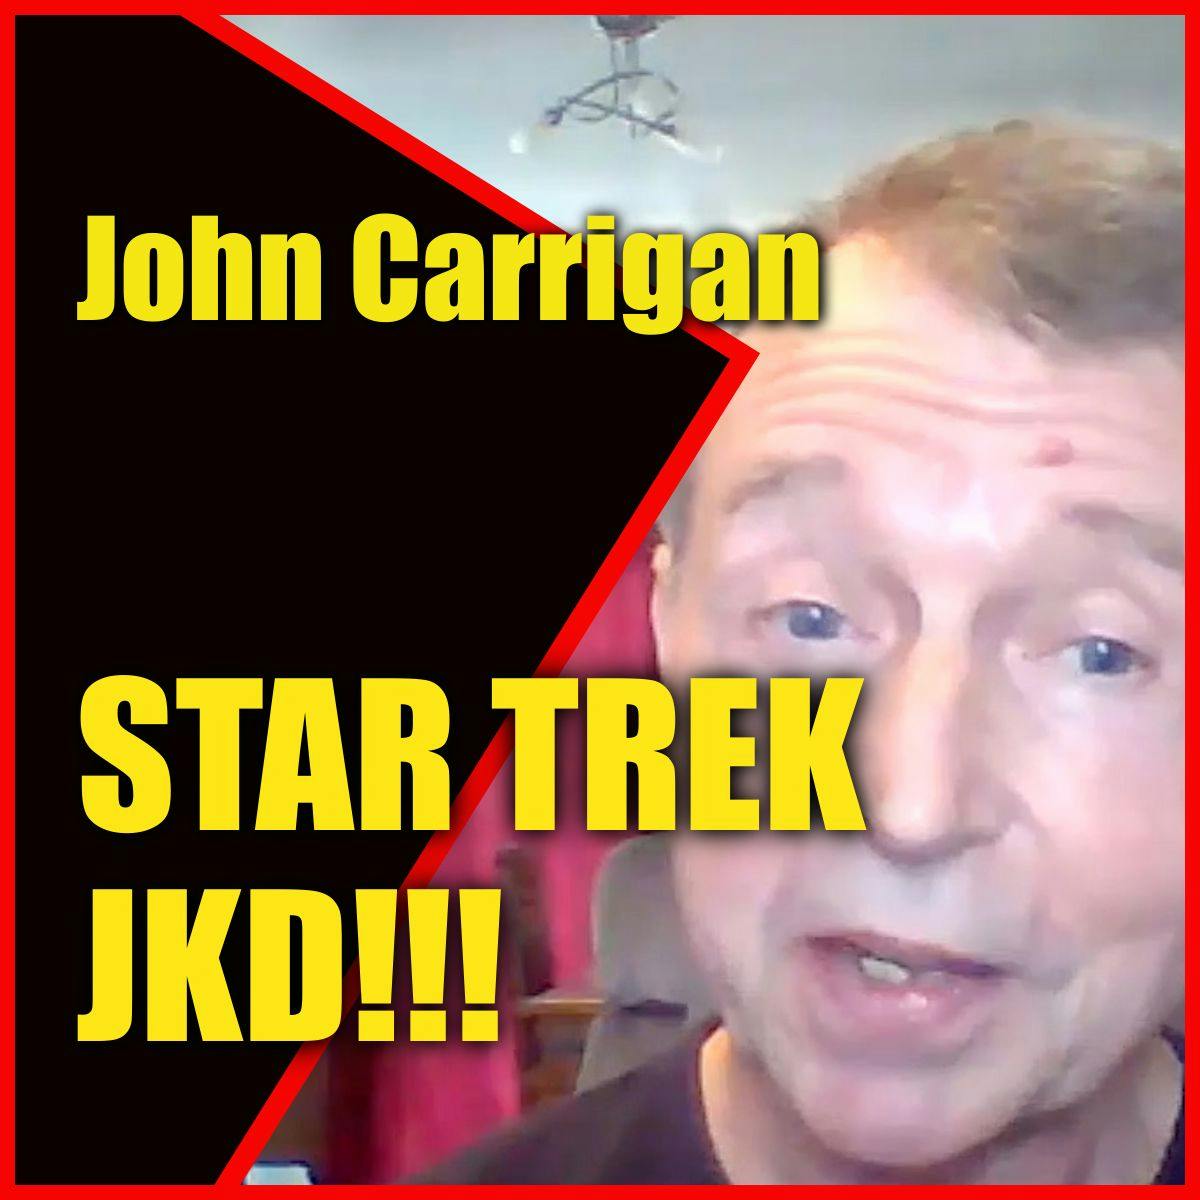 Star Trek JKD!!!